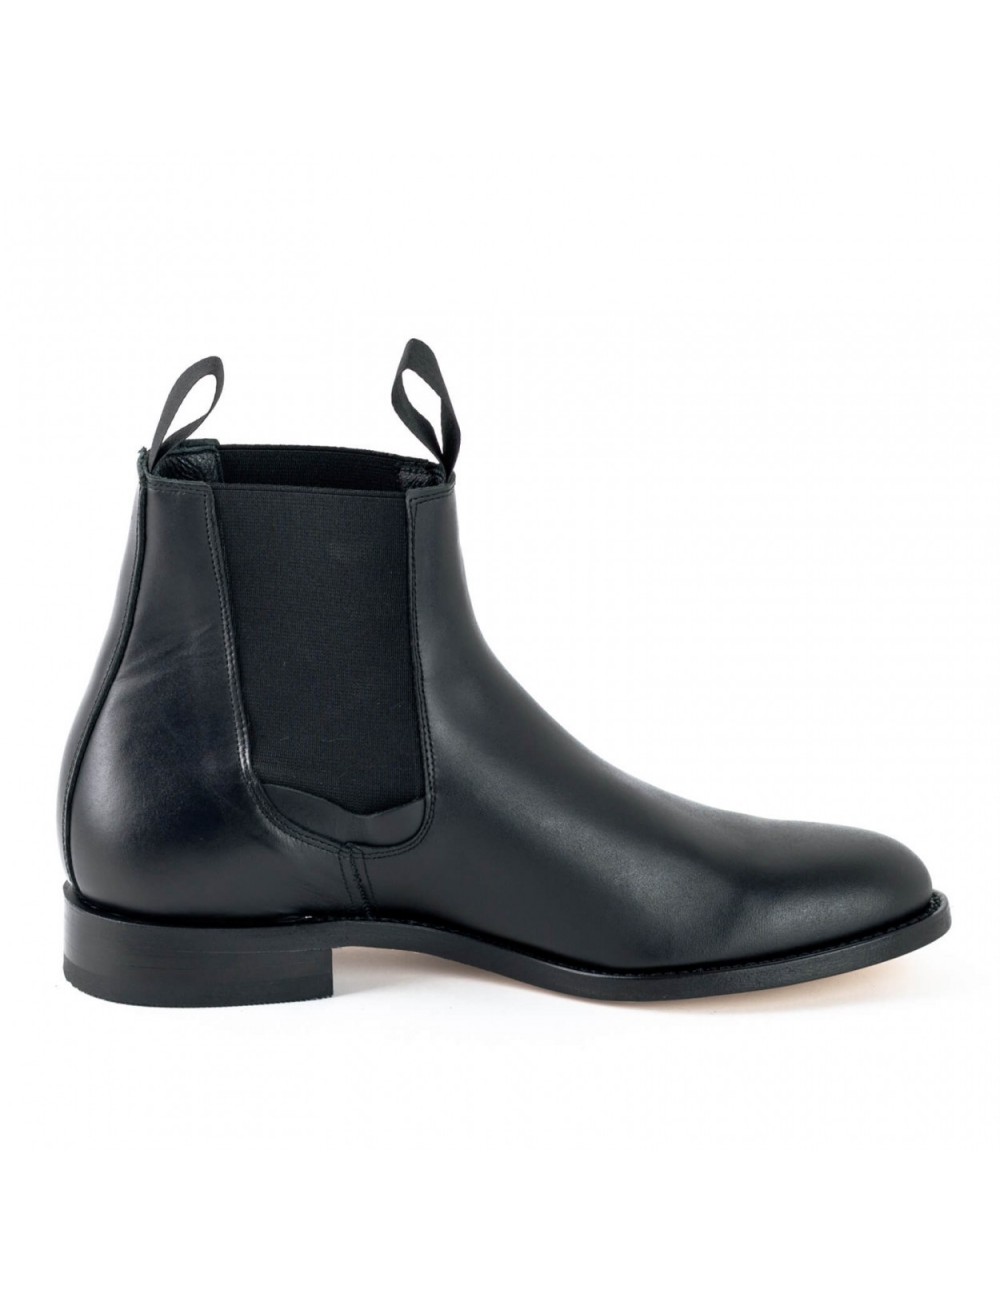 Boots chelsea cuir noir artisanales - Bottines femme artisanales